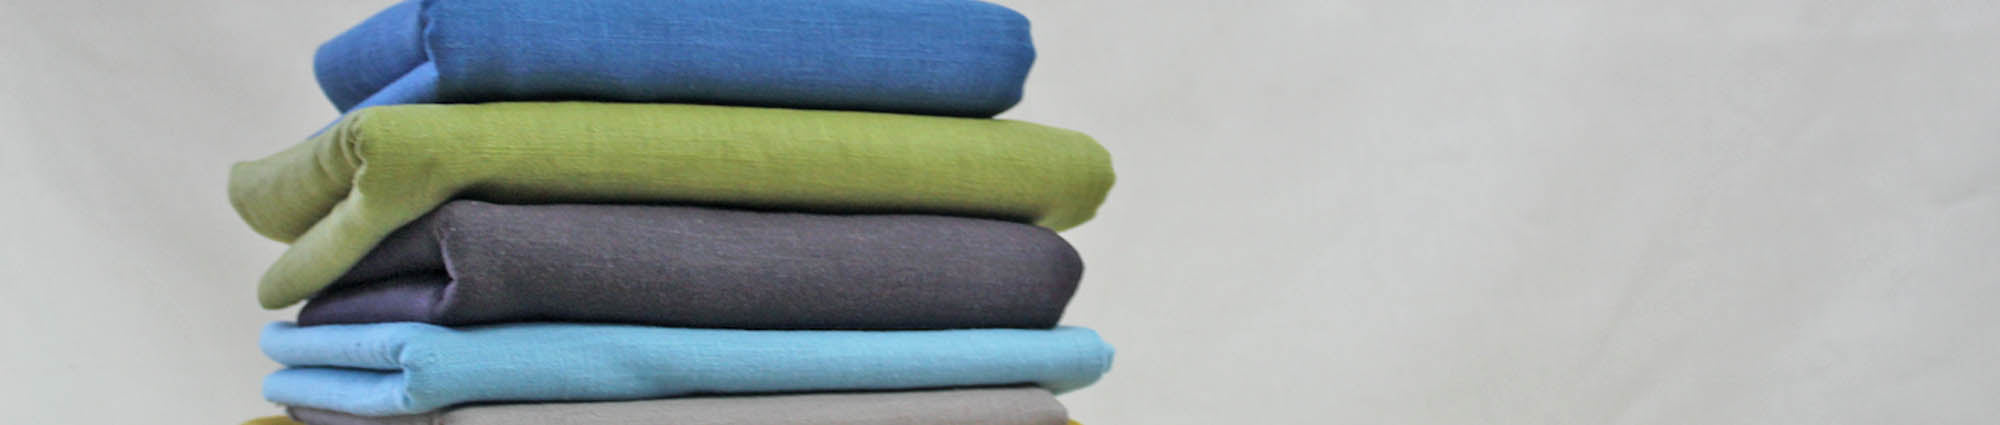 Types of Pants & Clothing Fabrics & Materials | Dockers® US